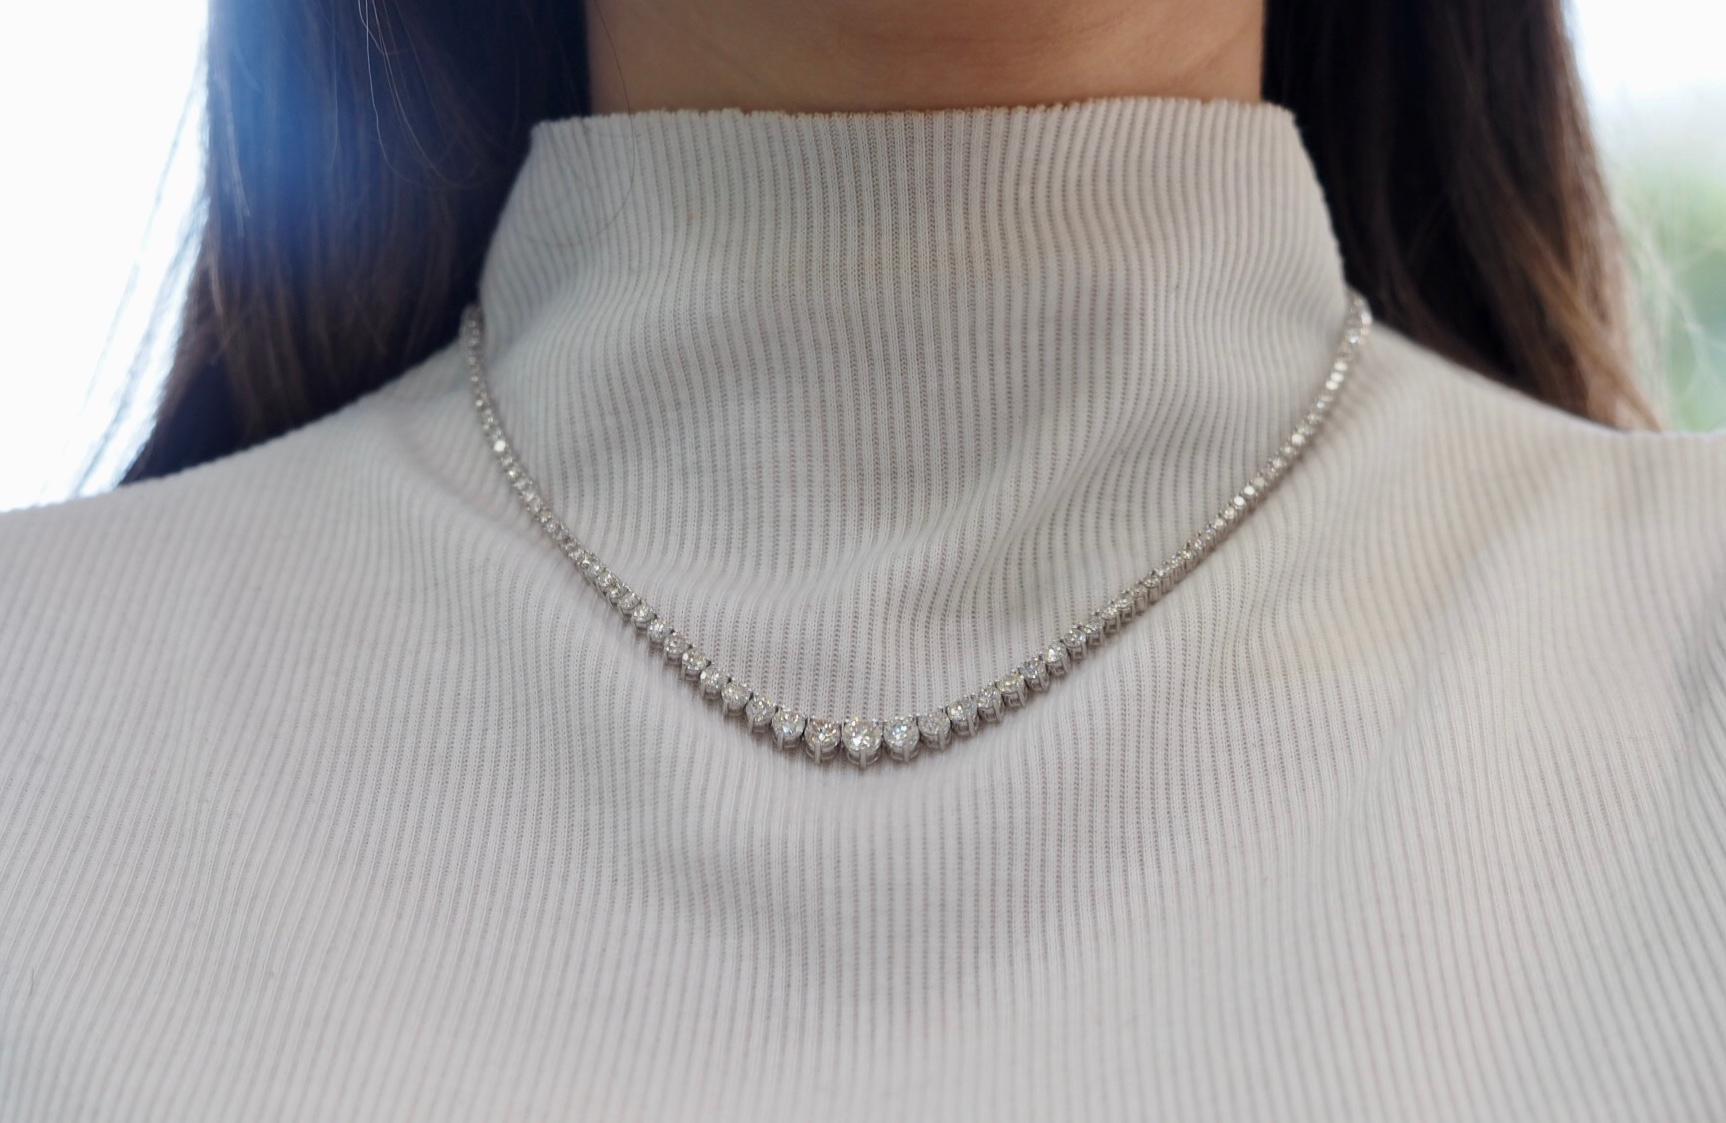 10 ct diamond tennis necklace